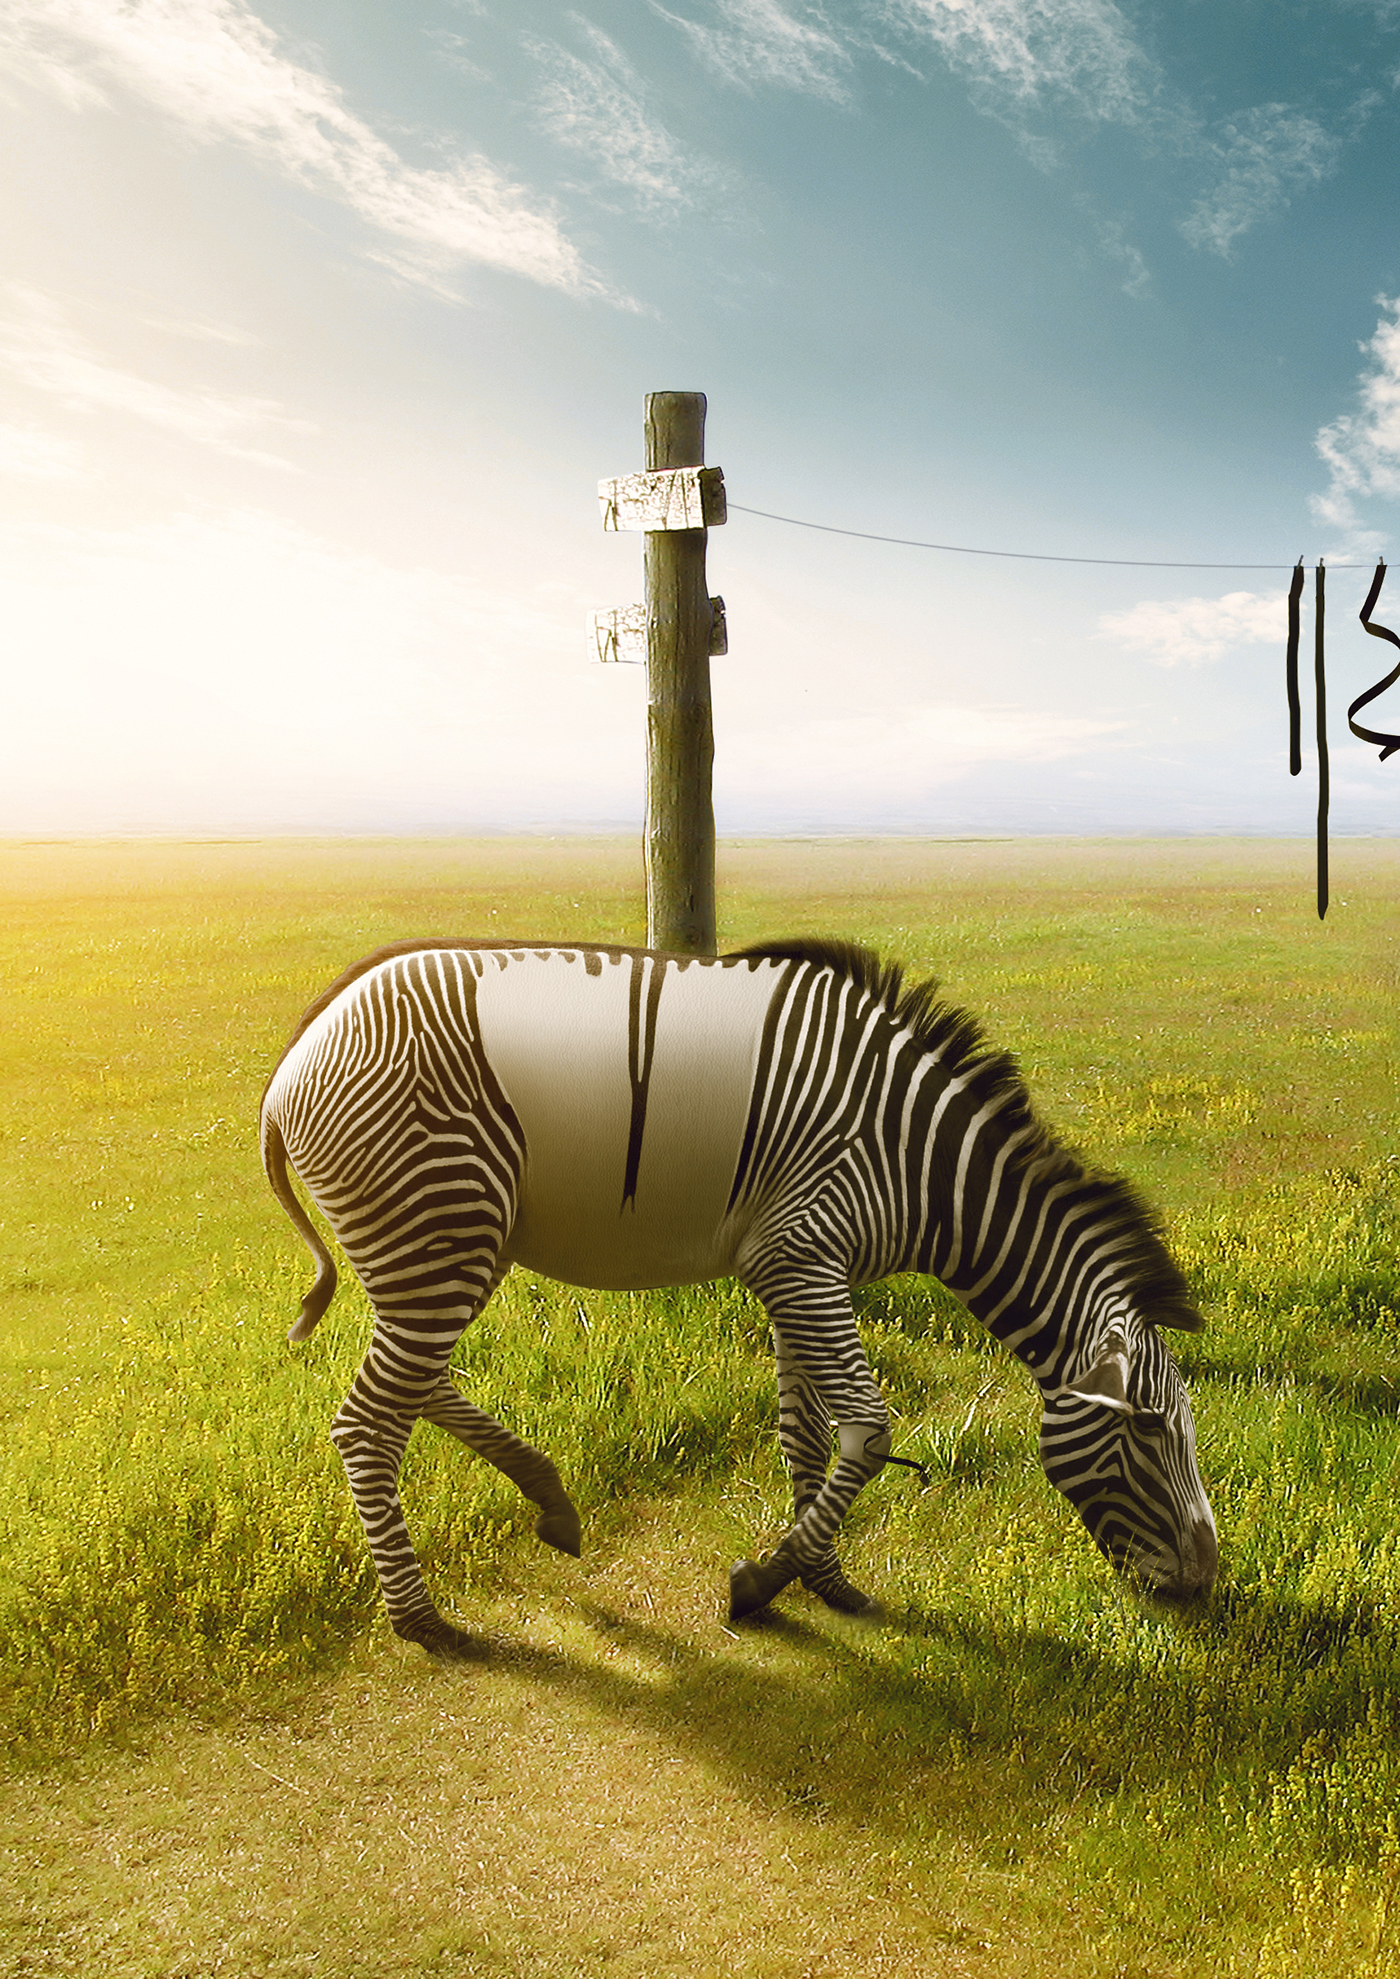 Washing manipulation retouch India zebra women creative Erik Johansson surreal Banksy's